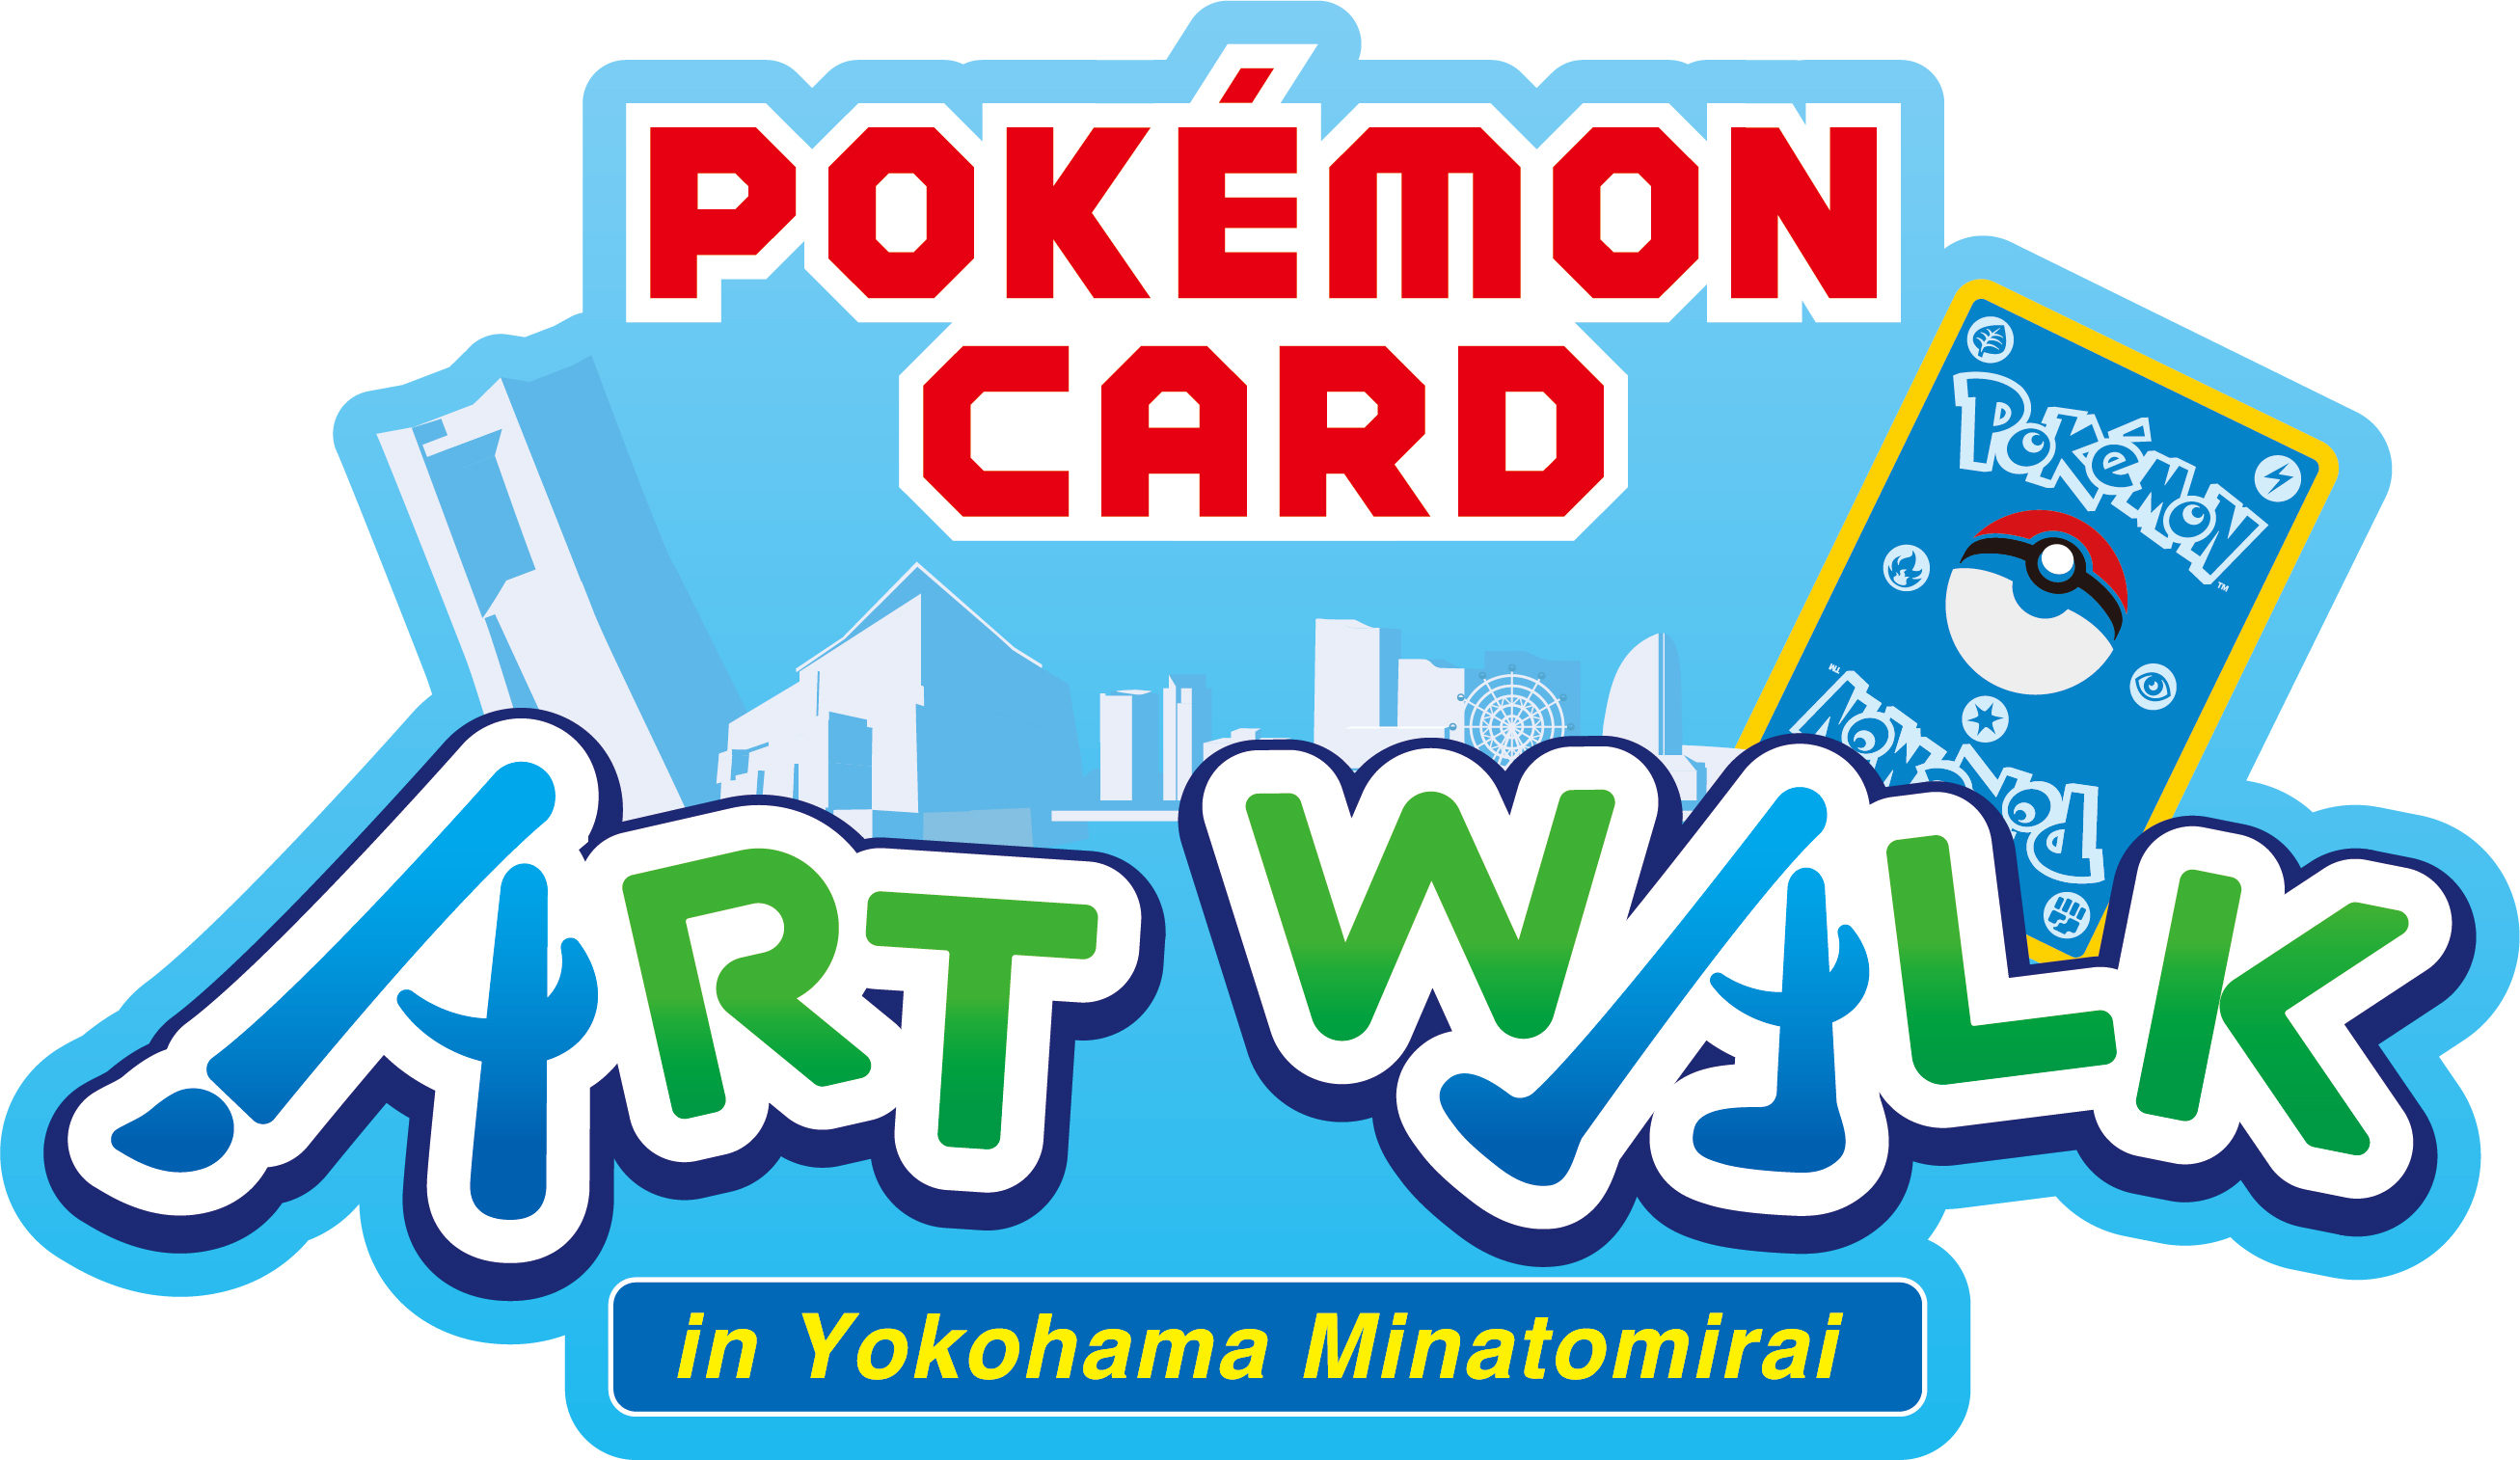 Pokémon Card Art Walk in Yokohama Minatomirai ー横浜みなとみらいを歩いて巡る、ポケモンカードアートの展覧会ー